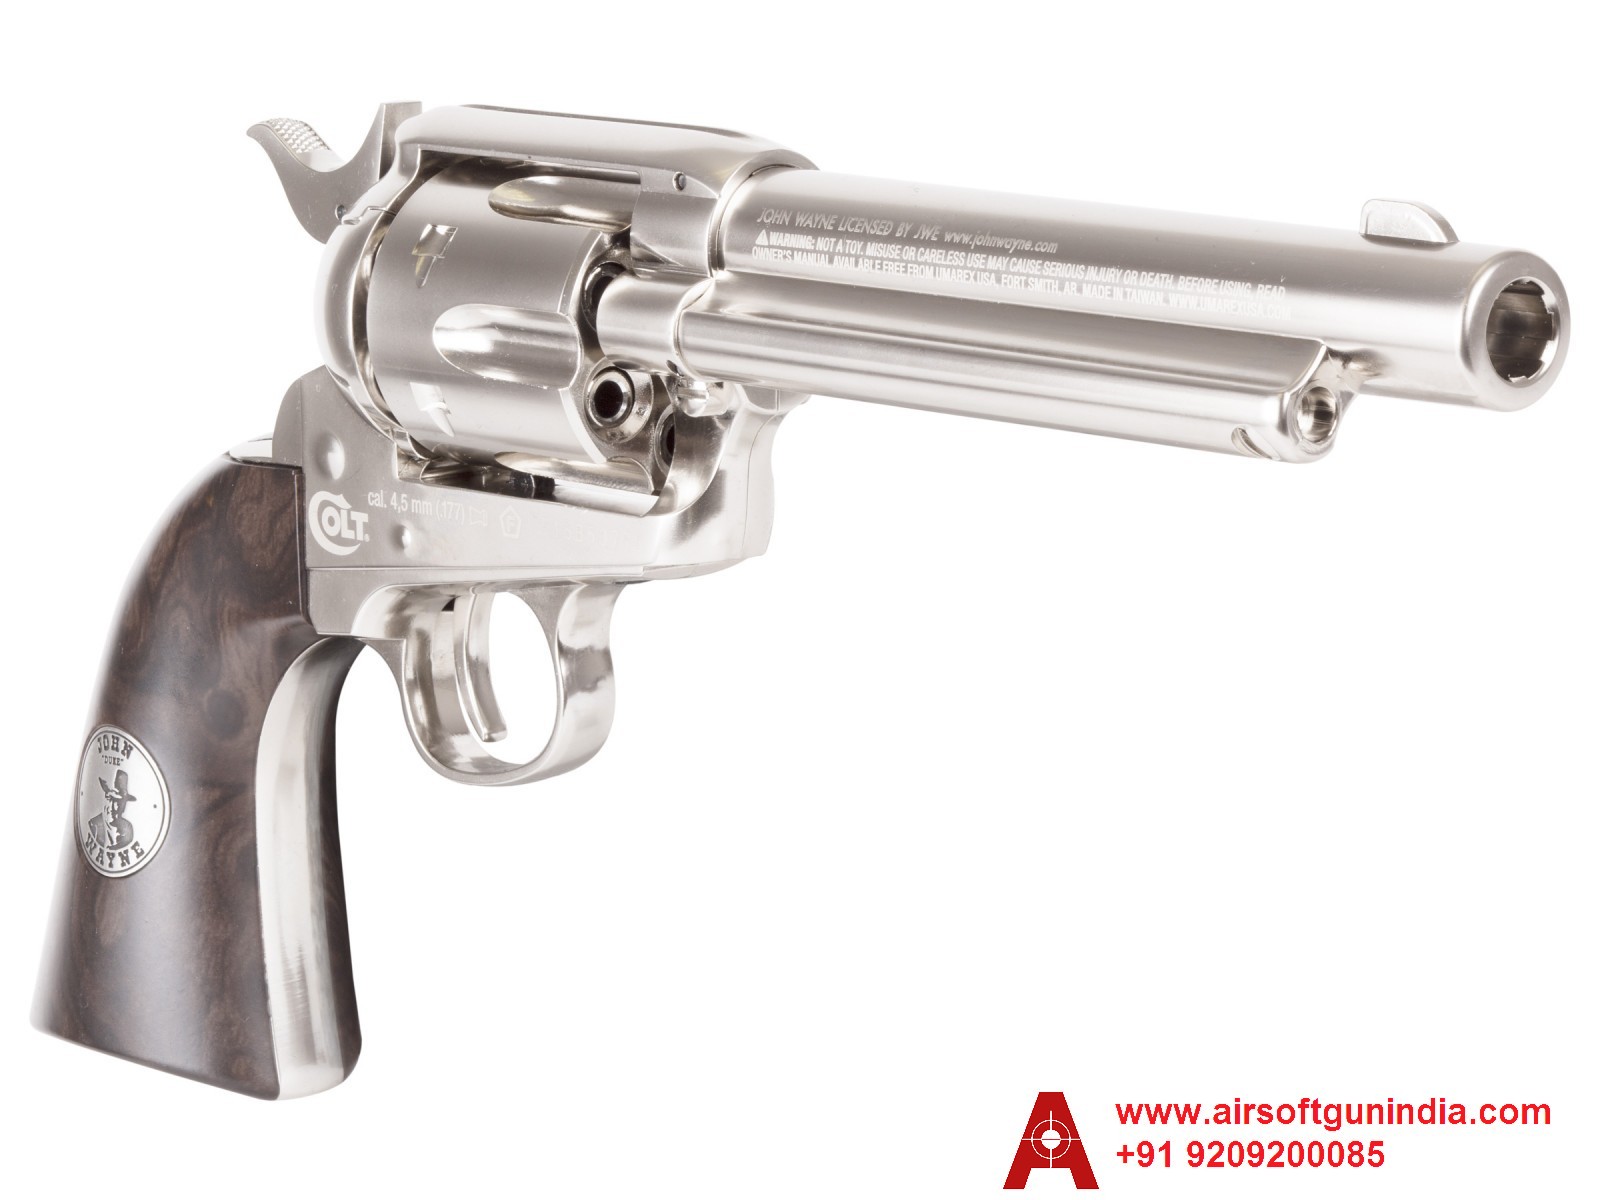 John Wayne Colt CO2 Pellet Revolver, Nickel By Airsoft Gun India